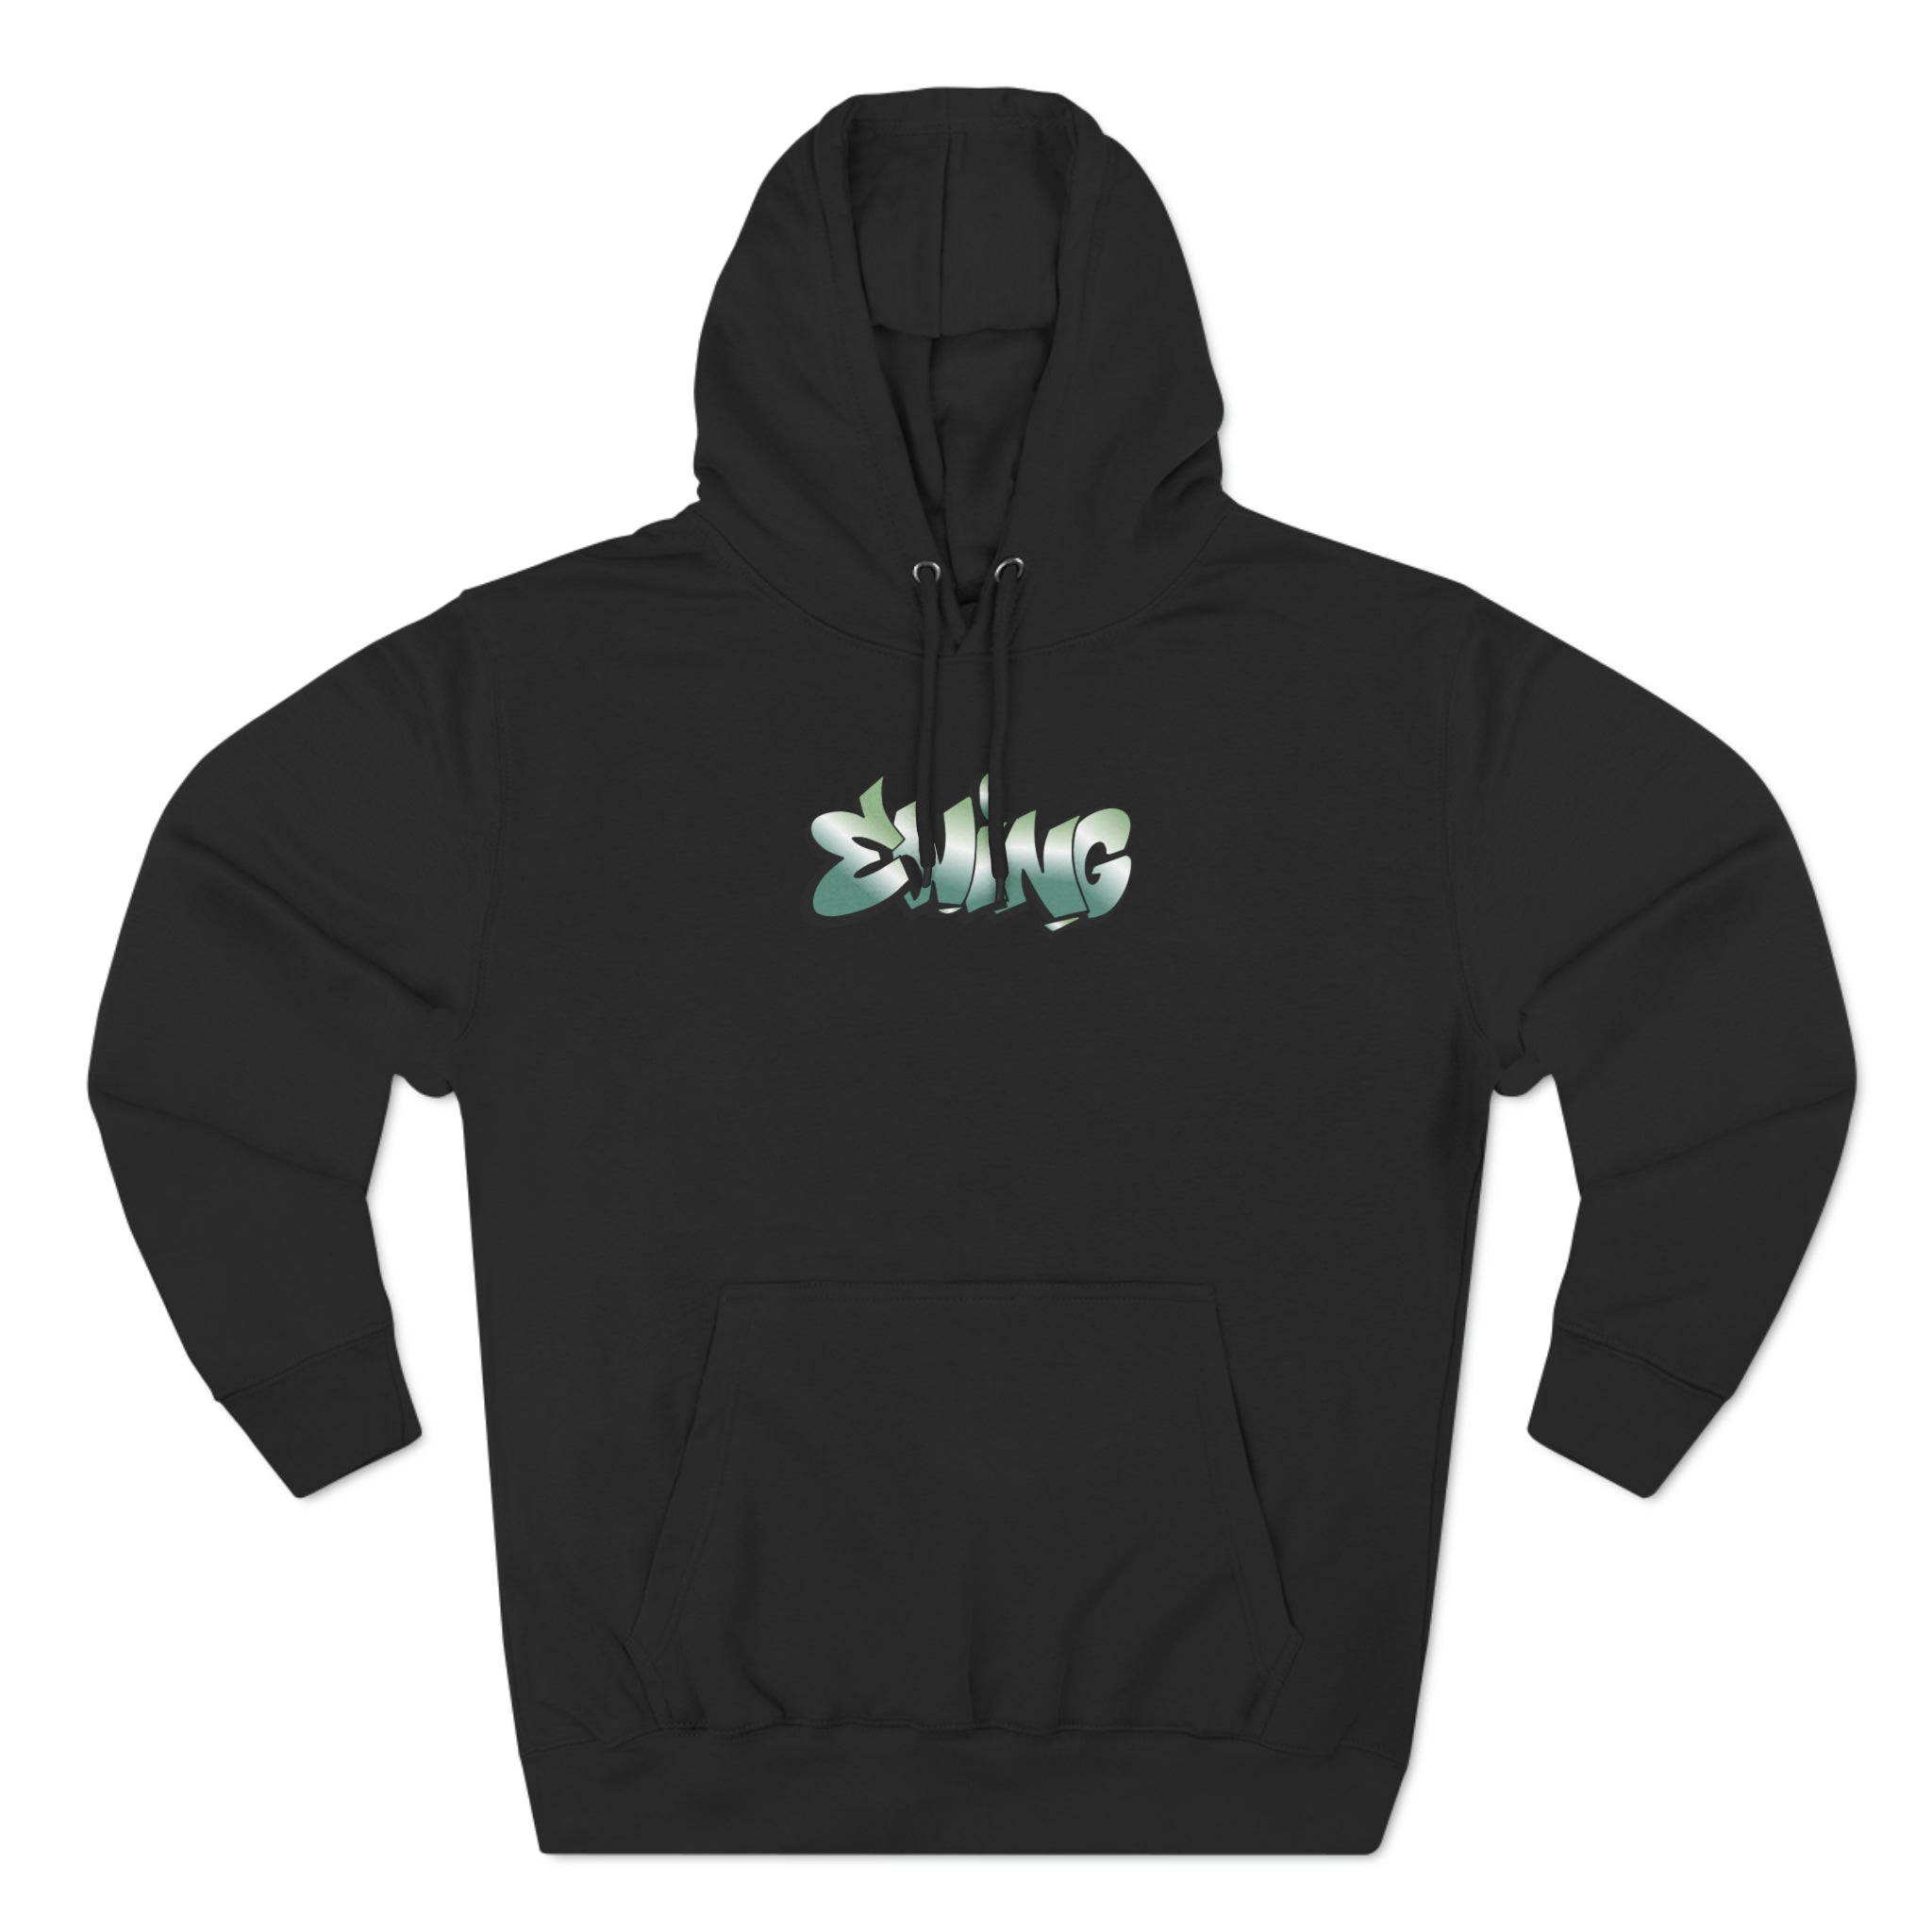 Ewing x Cope Unisex black hoodie